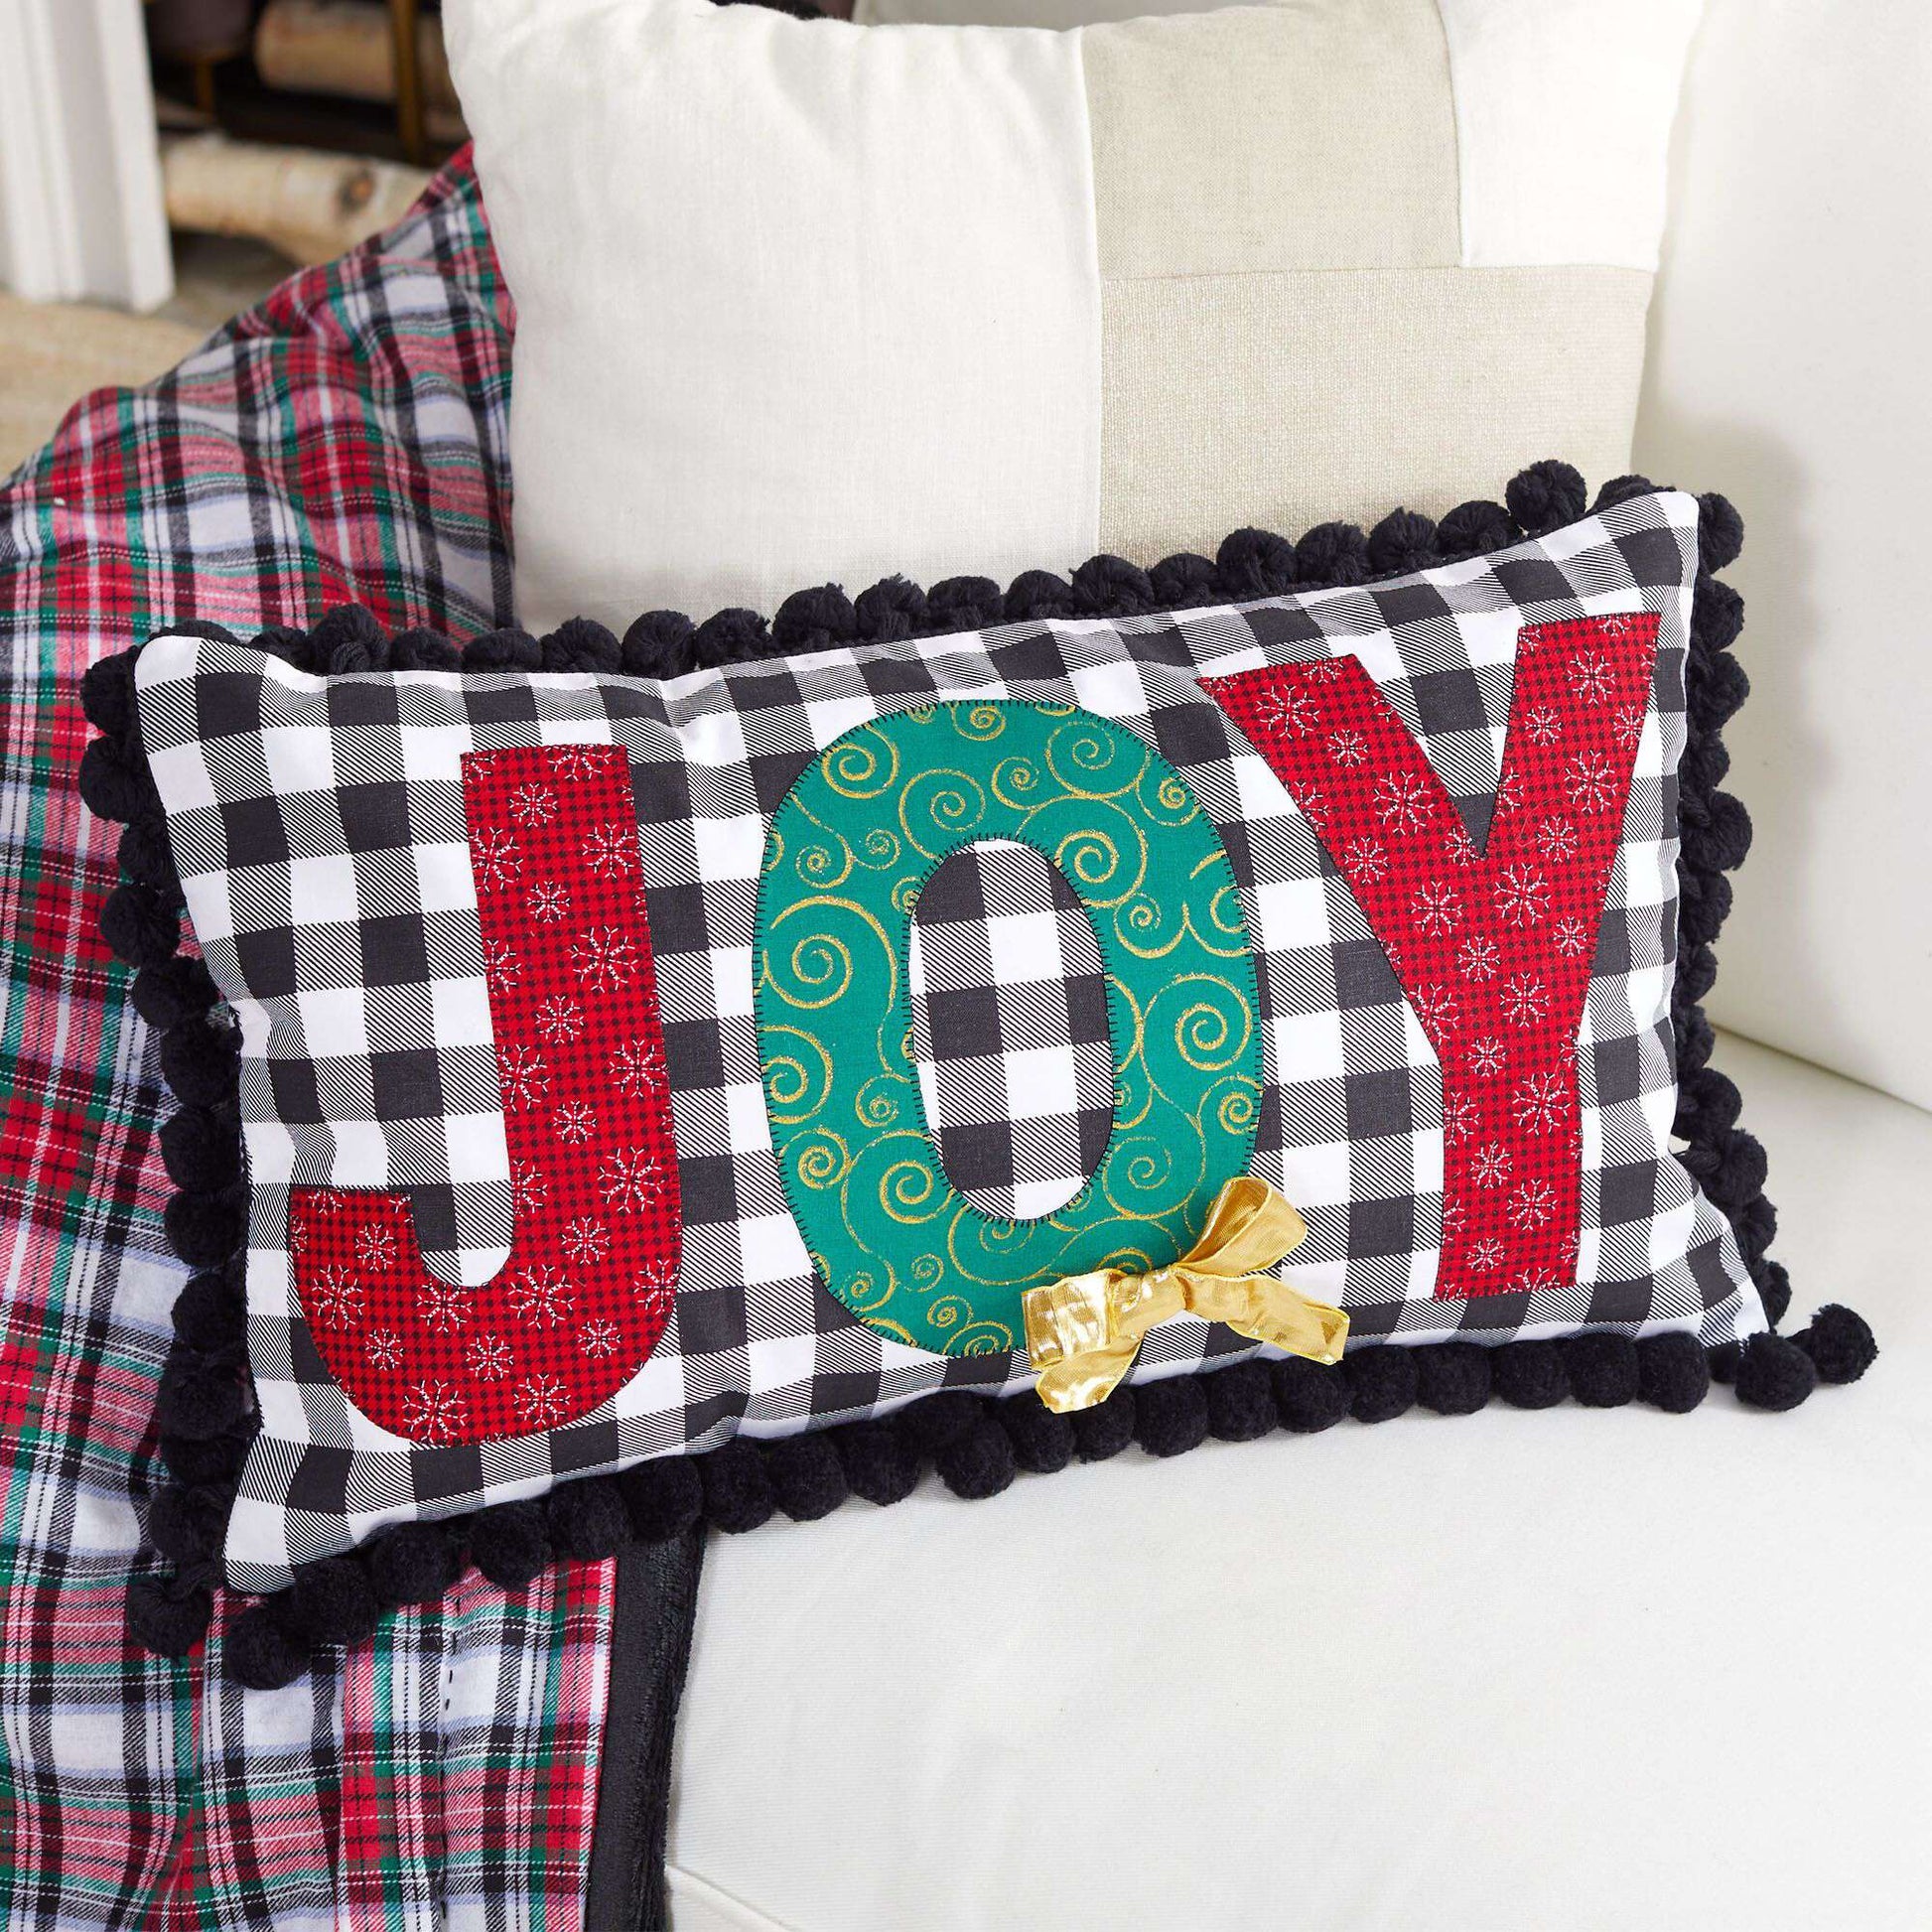 Free Coats & Clark Sewing Oh, Joy! Pillow Pattern